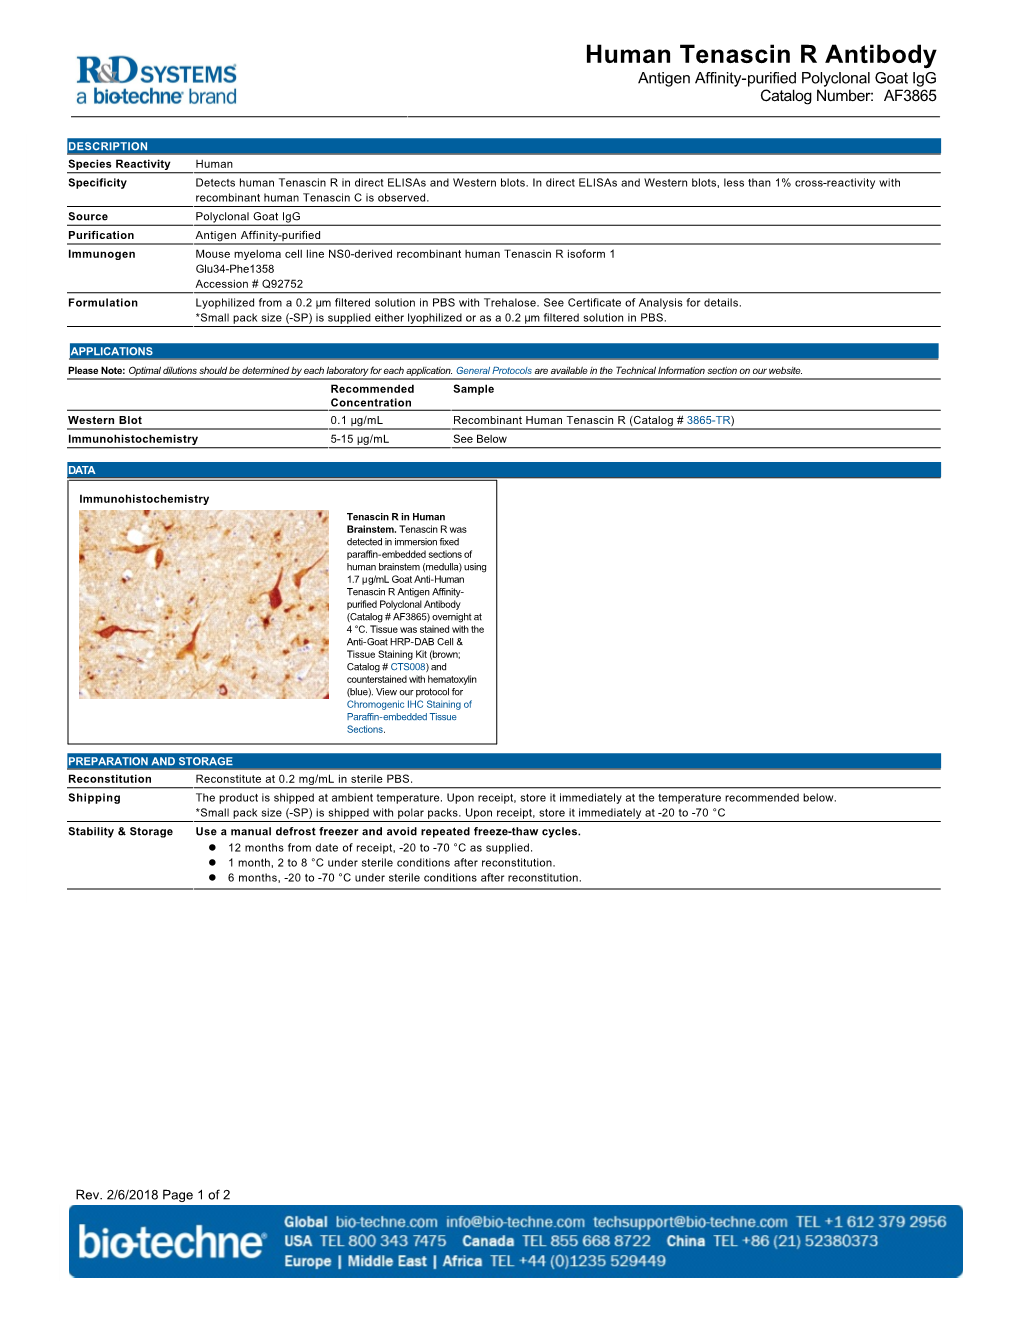 Human Tenascin R Antibody Antigen Affinity-Purified Polyclonal Goat Igg Catalog Number: AF3865